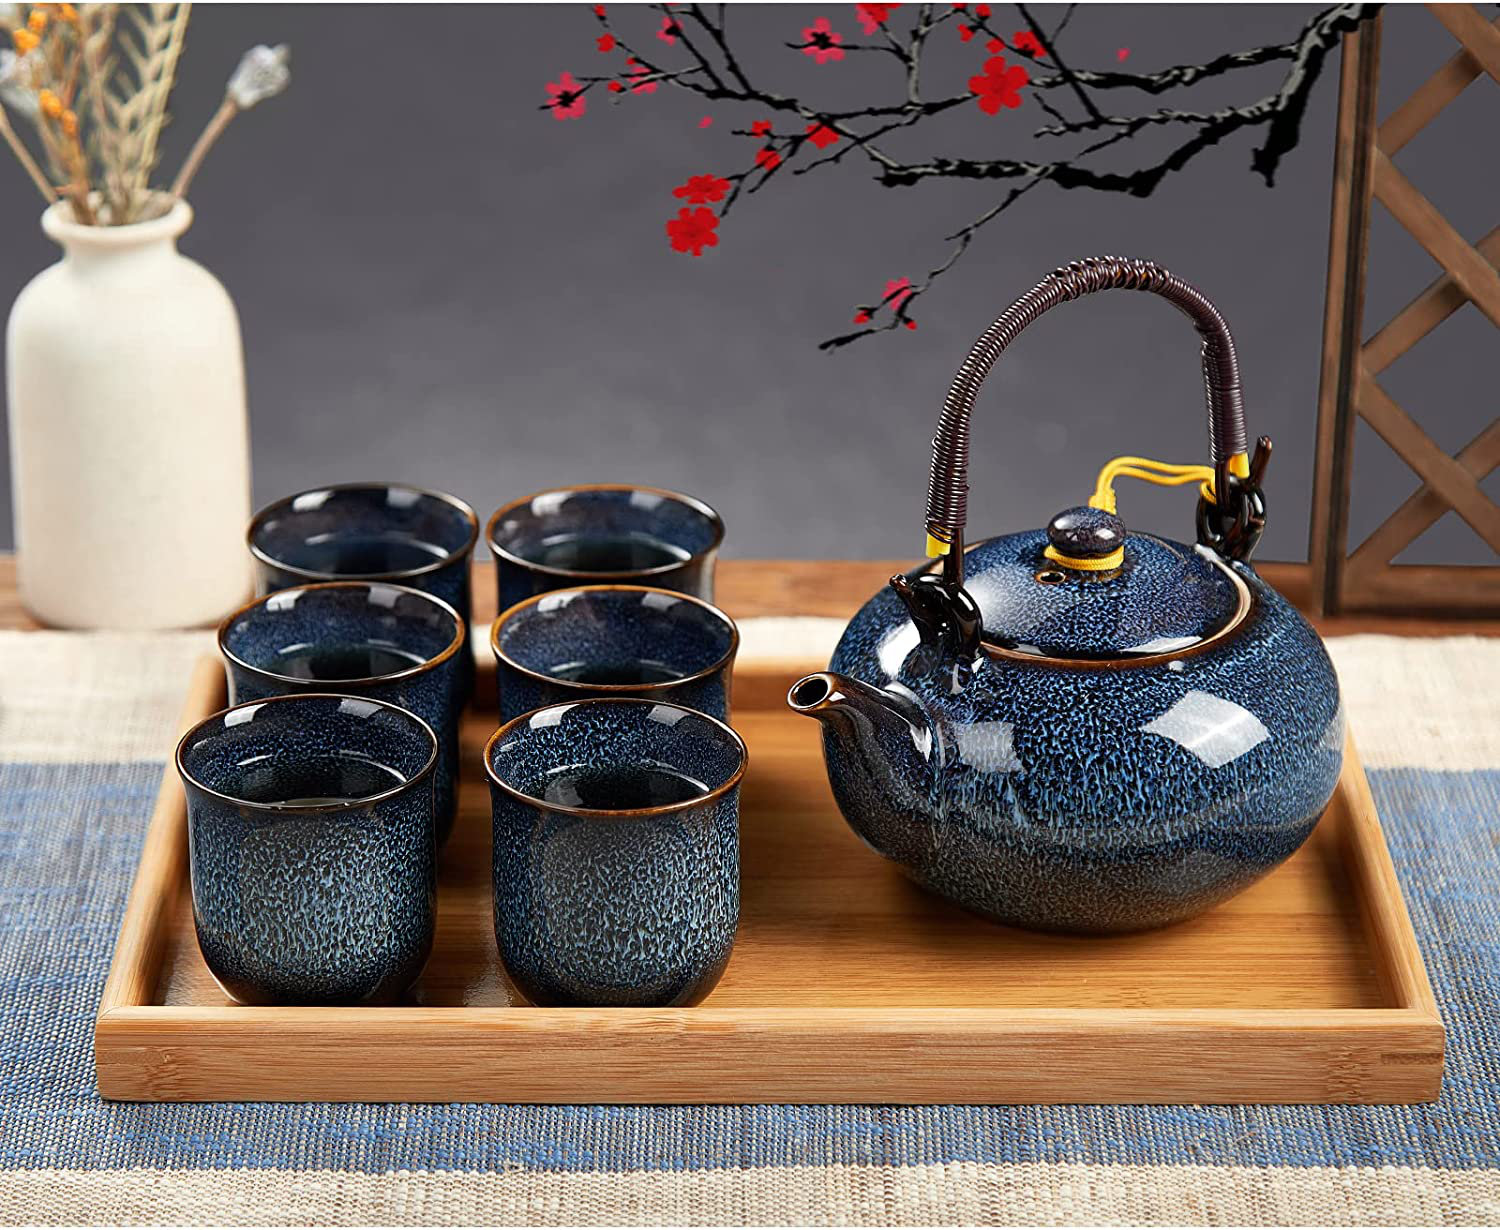 Vintage Electric Water Heater Tea Cup Set Coffee Pot Teapot Blue Floral  Japan